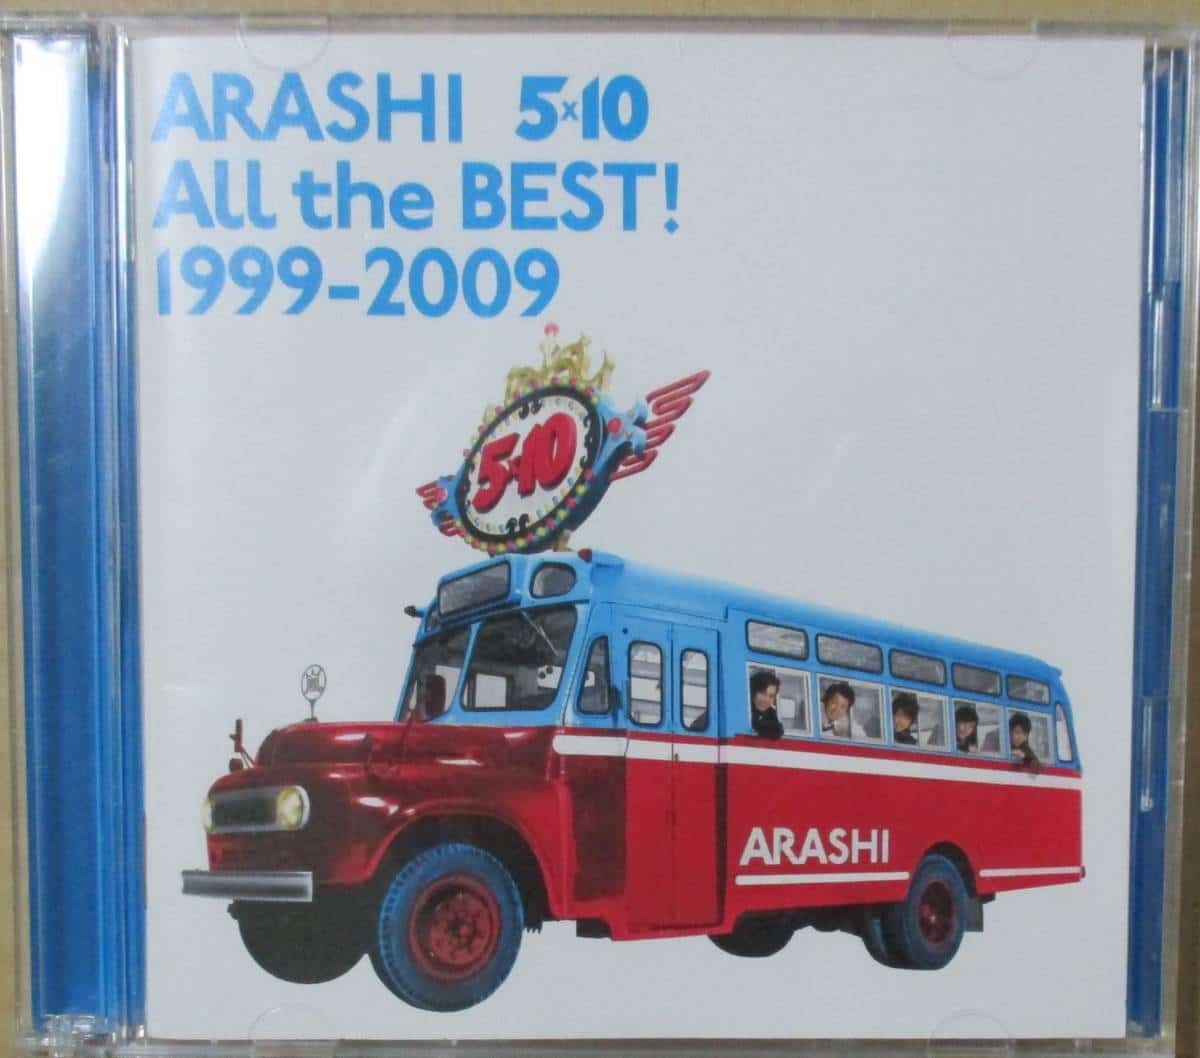 ARASHI 5×10 All the BEST! 1999-2009